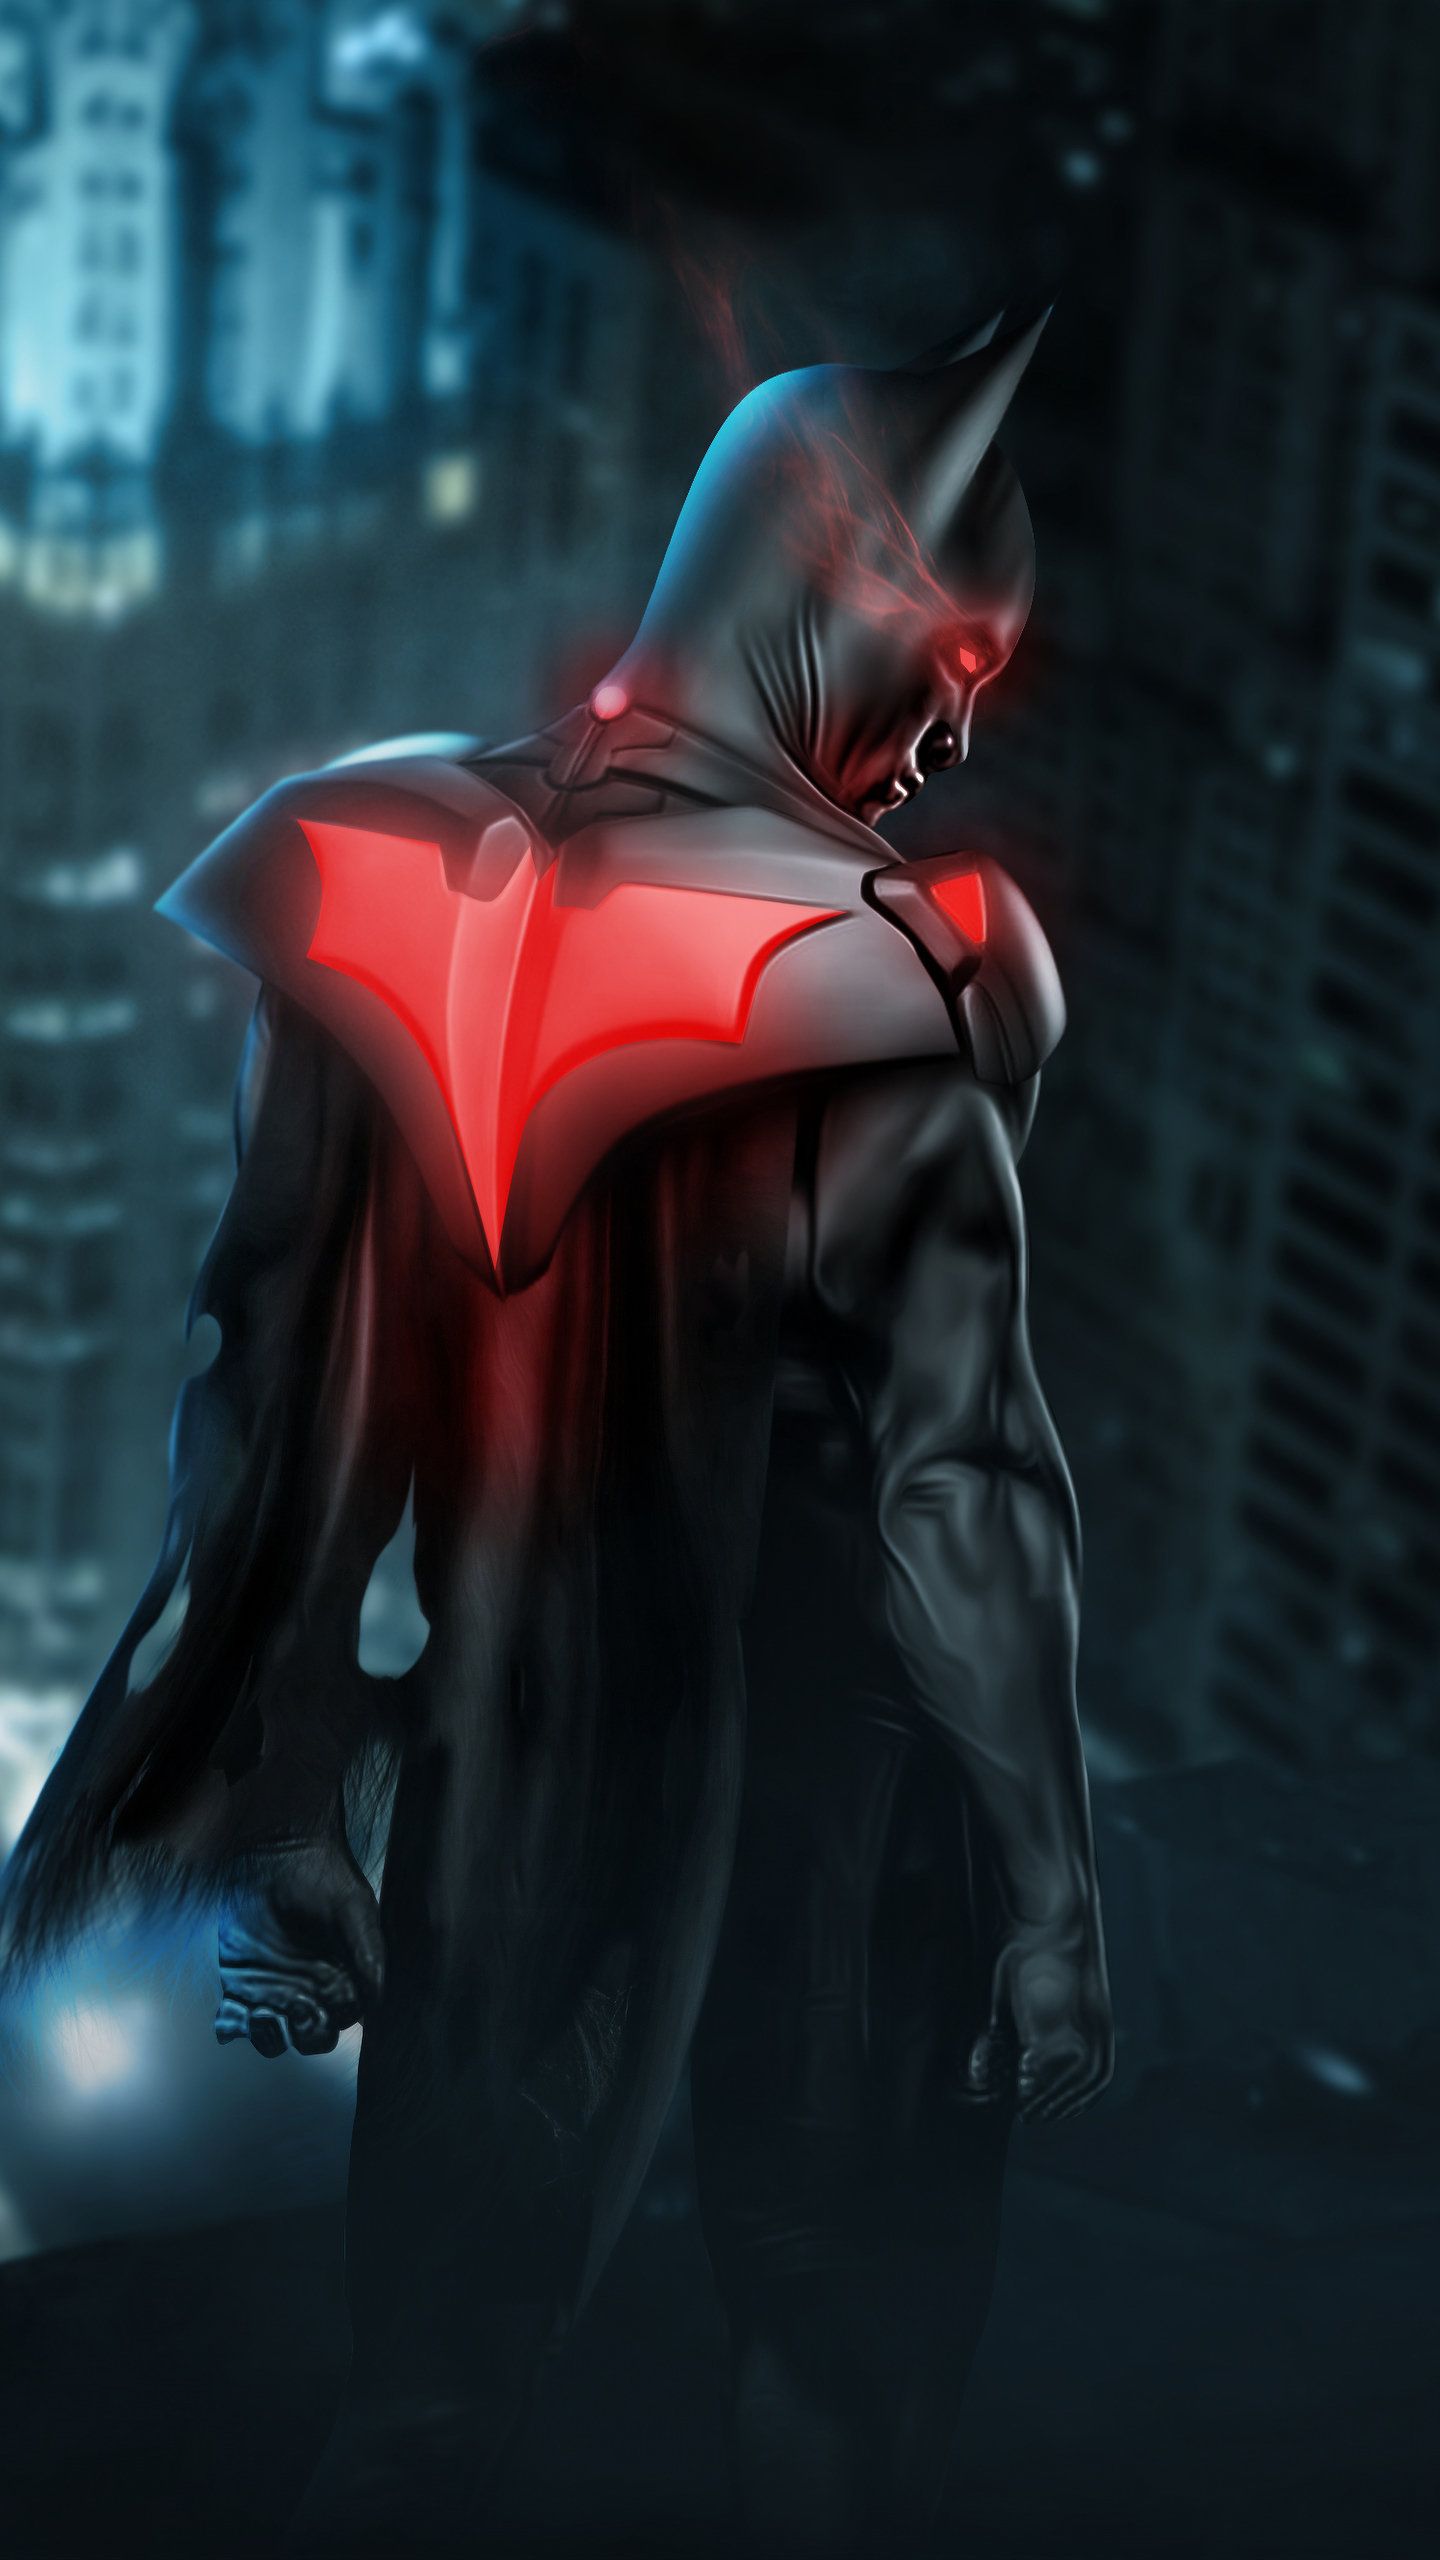 I AM Batman 4K, HD Superheroes Wallpaper Photo and Picture. Batman, Batman beyond, Batman suit